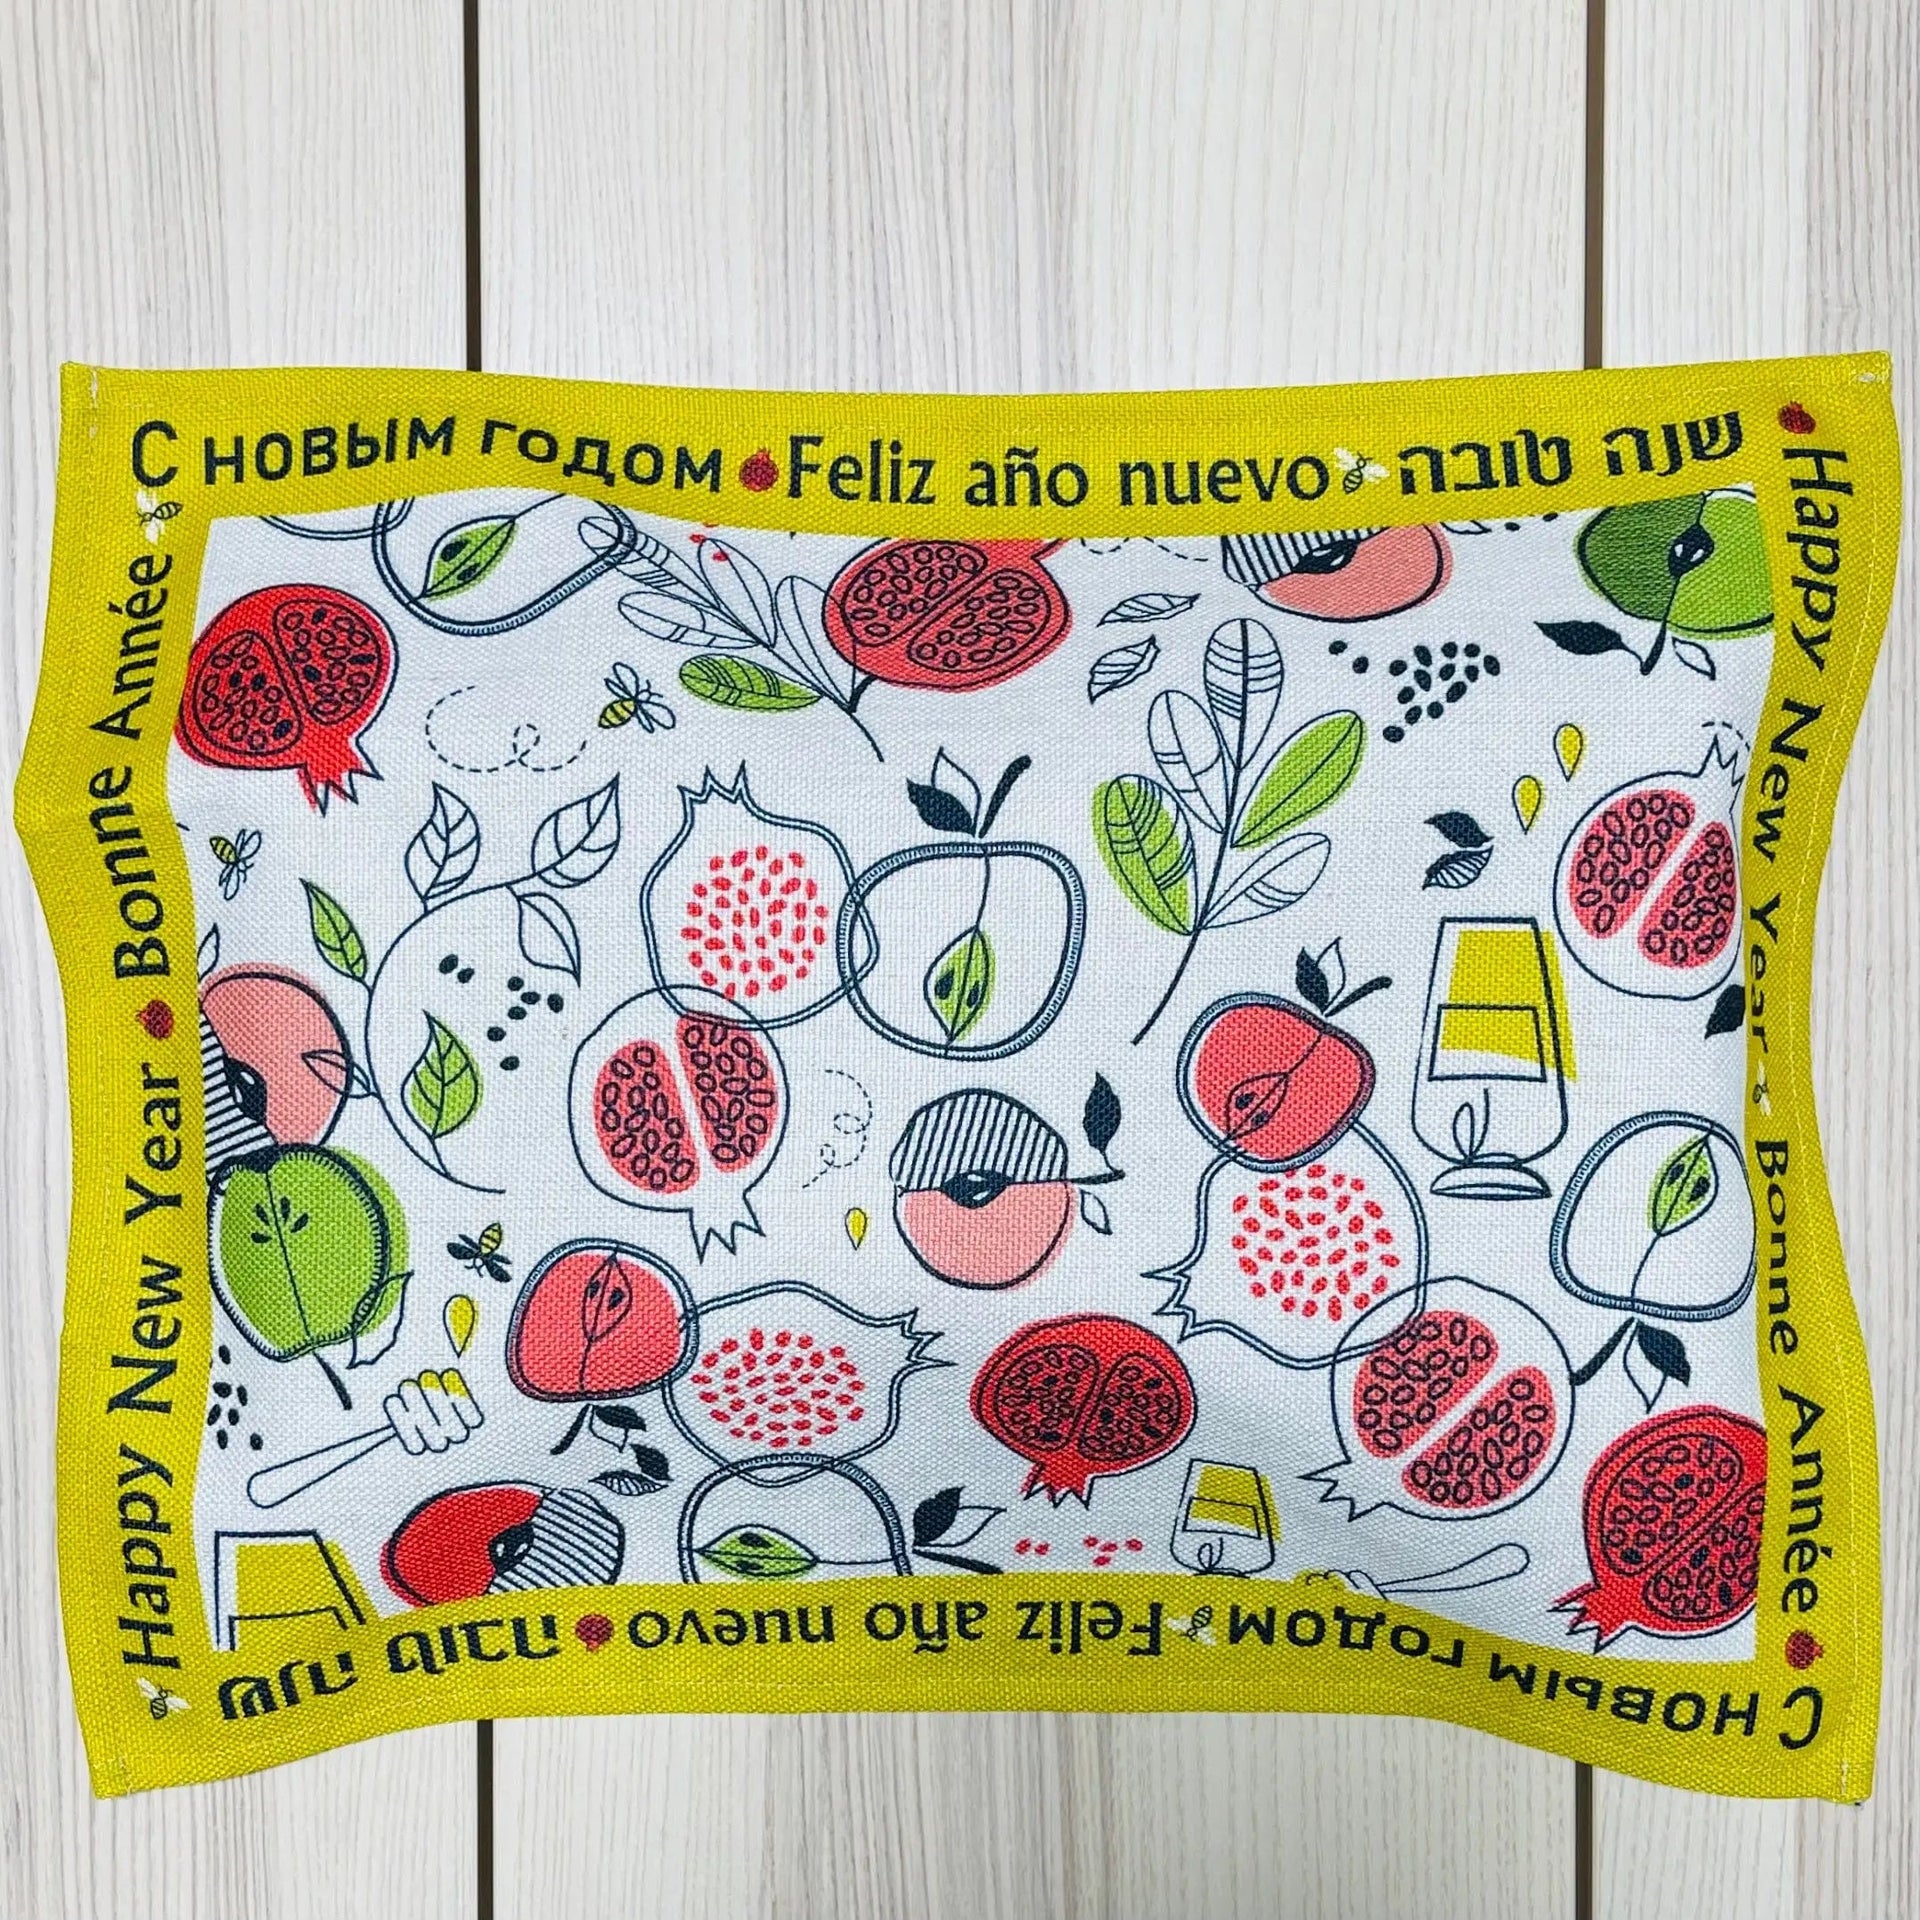 Chai Modern Challah Covers Rosh Hashanah Pomegranate Challah Cover